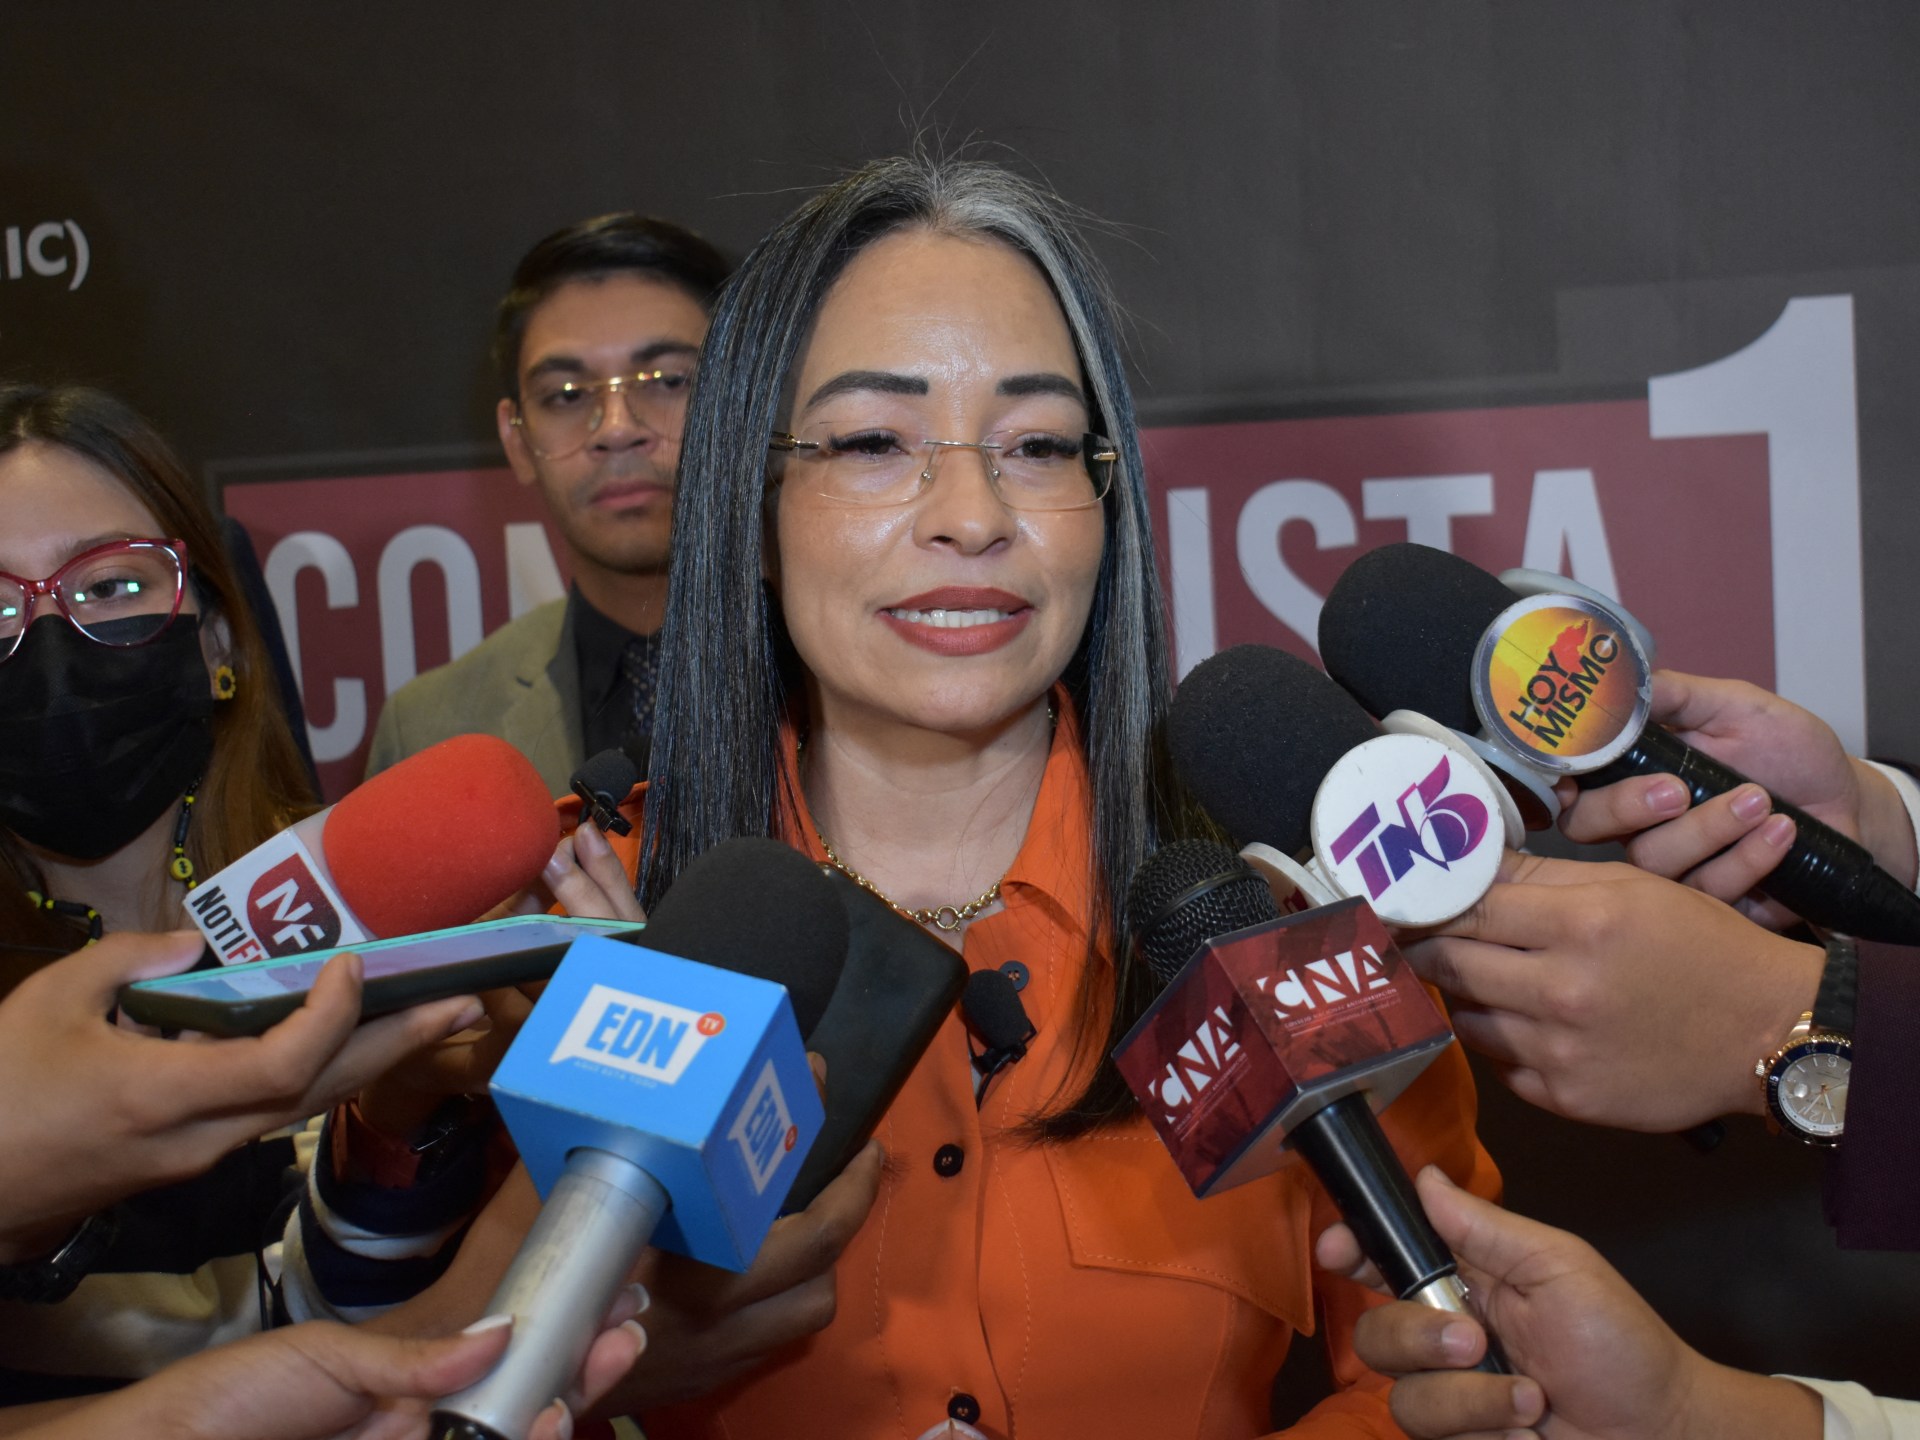 Anti-corruption advocate flees Honduras after receiving threats